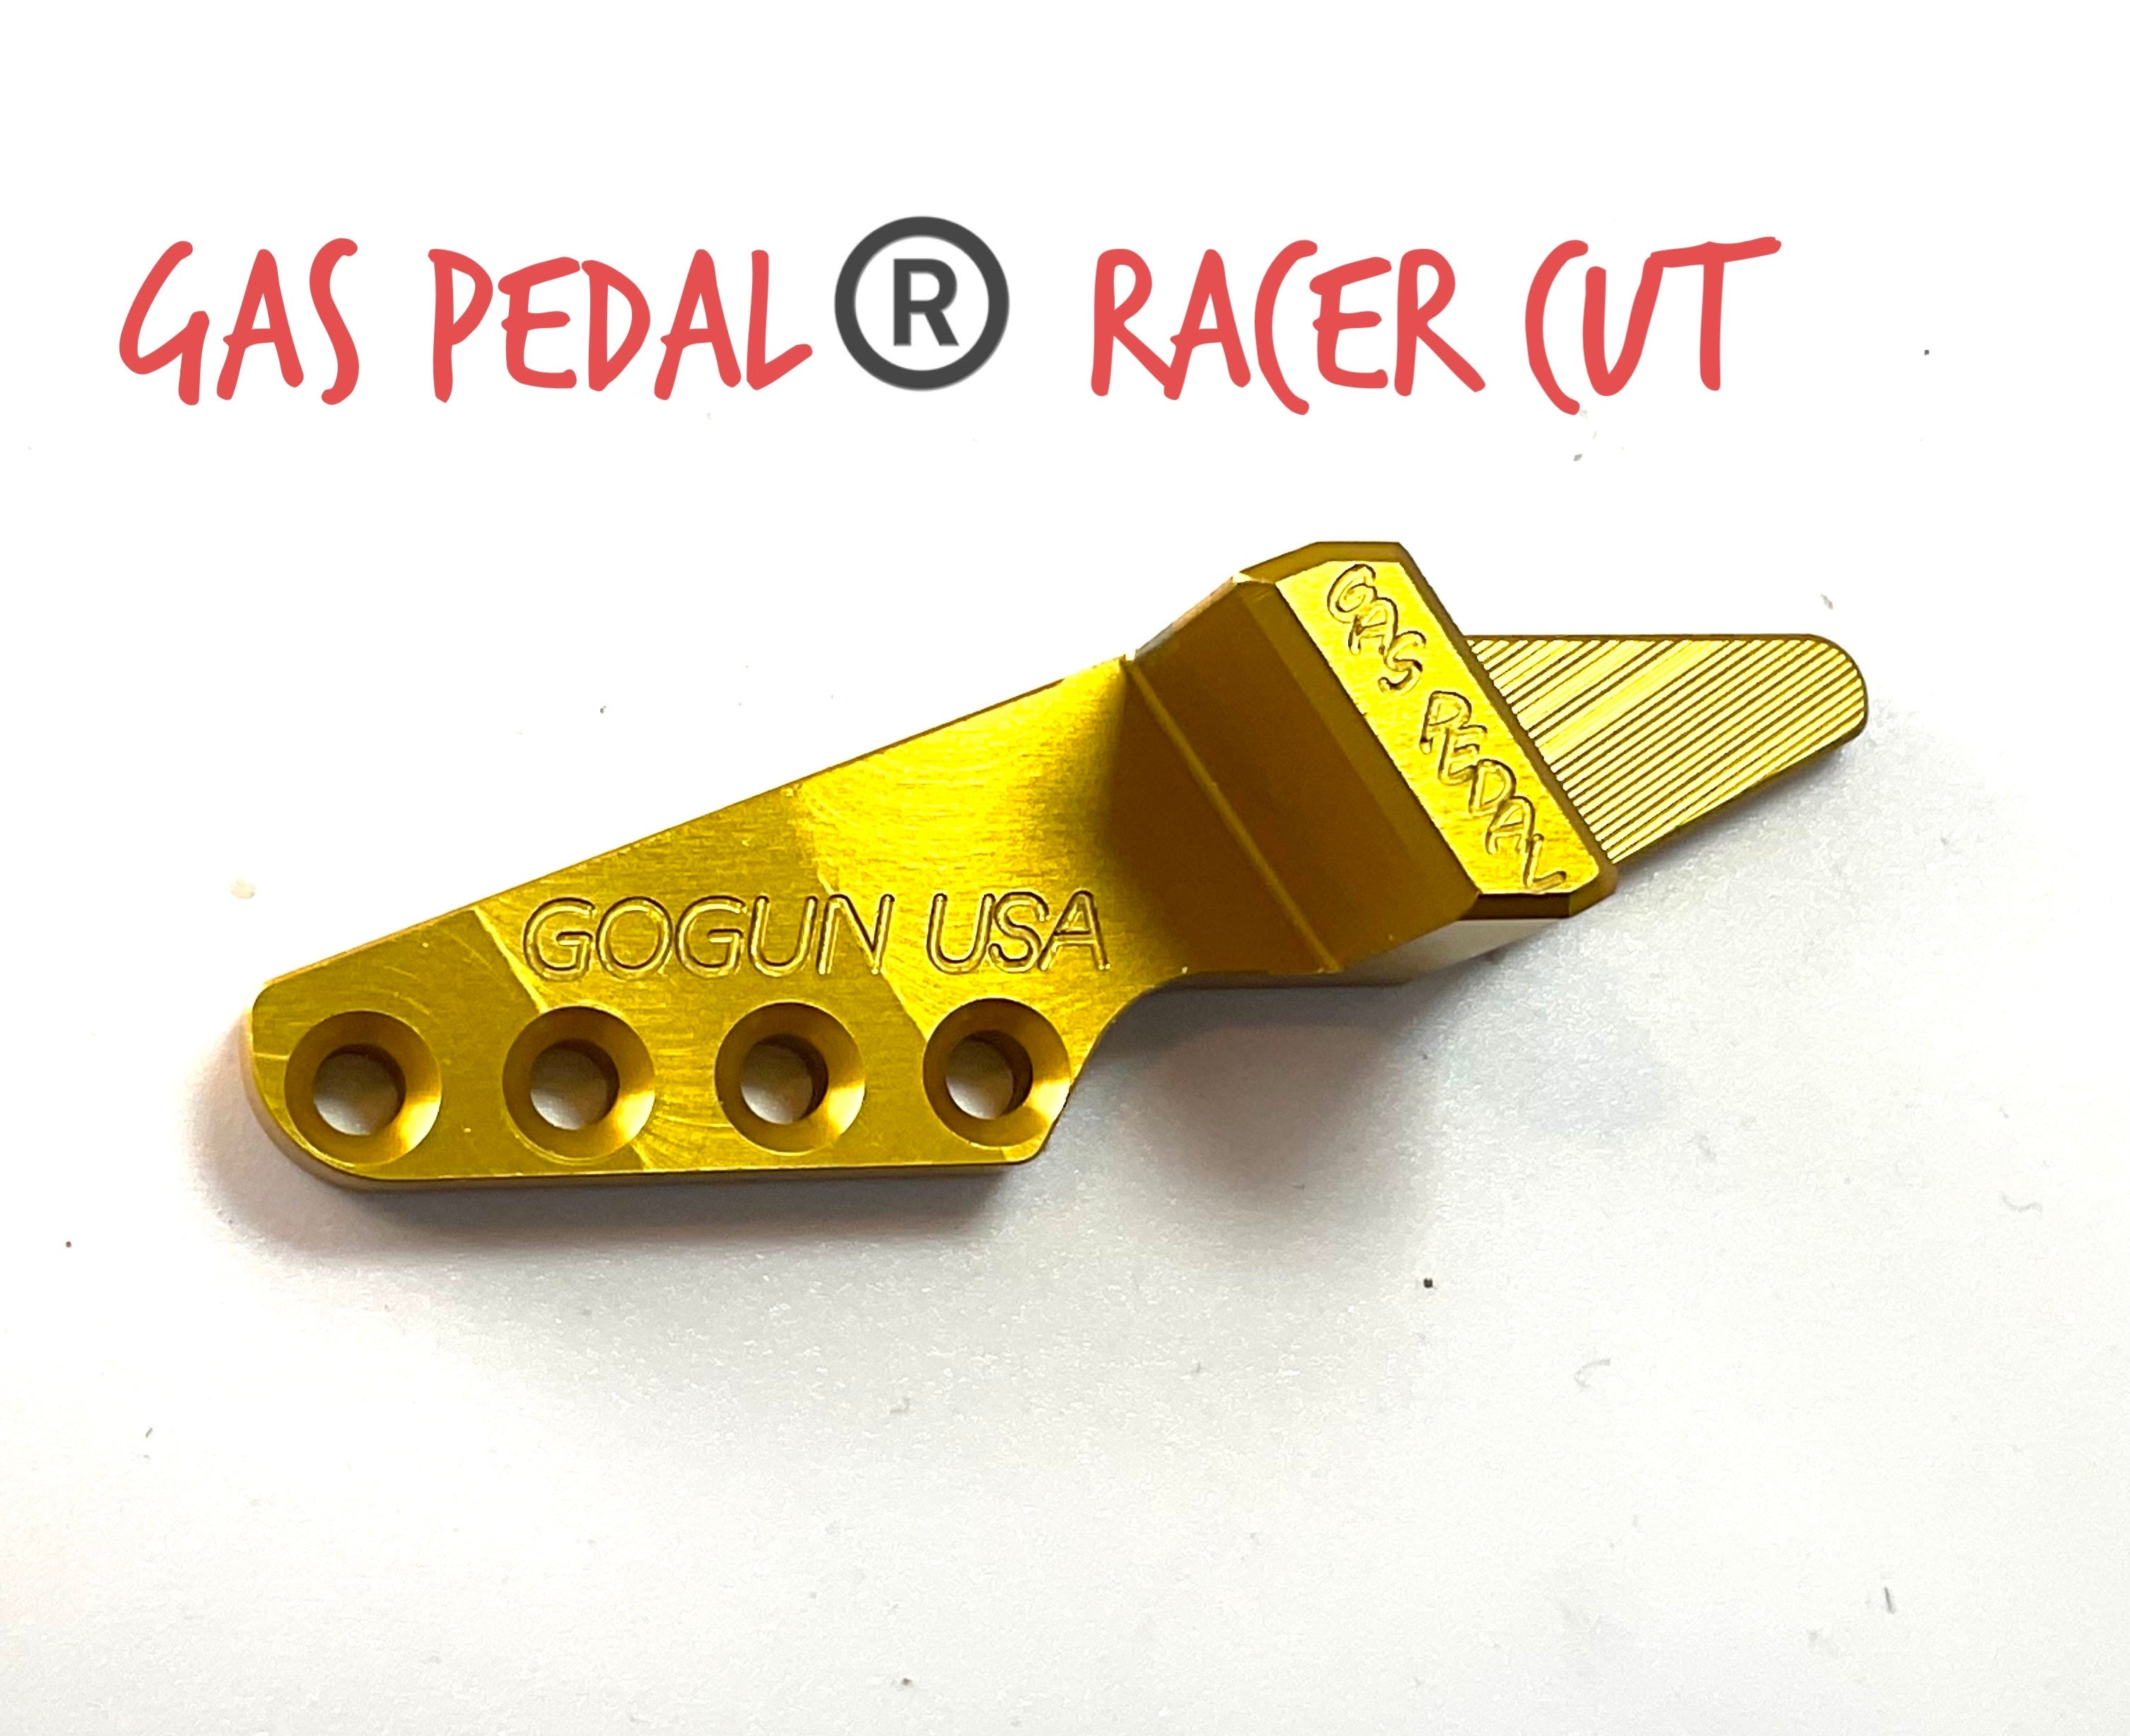 GasPedal® Racer Cut Thumb Assist Aluminum Machine Finish (sku 112)